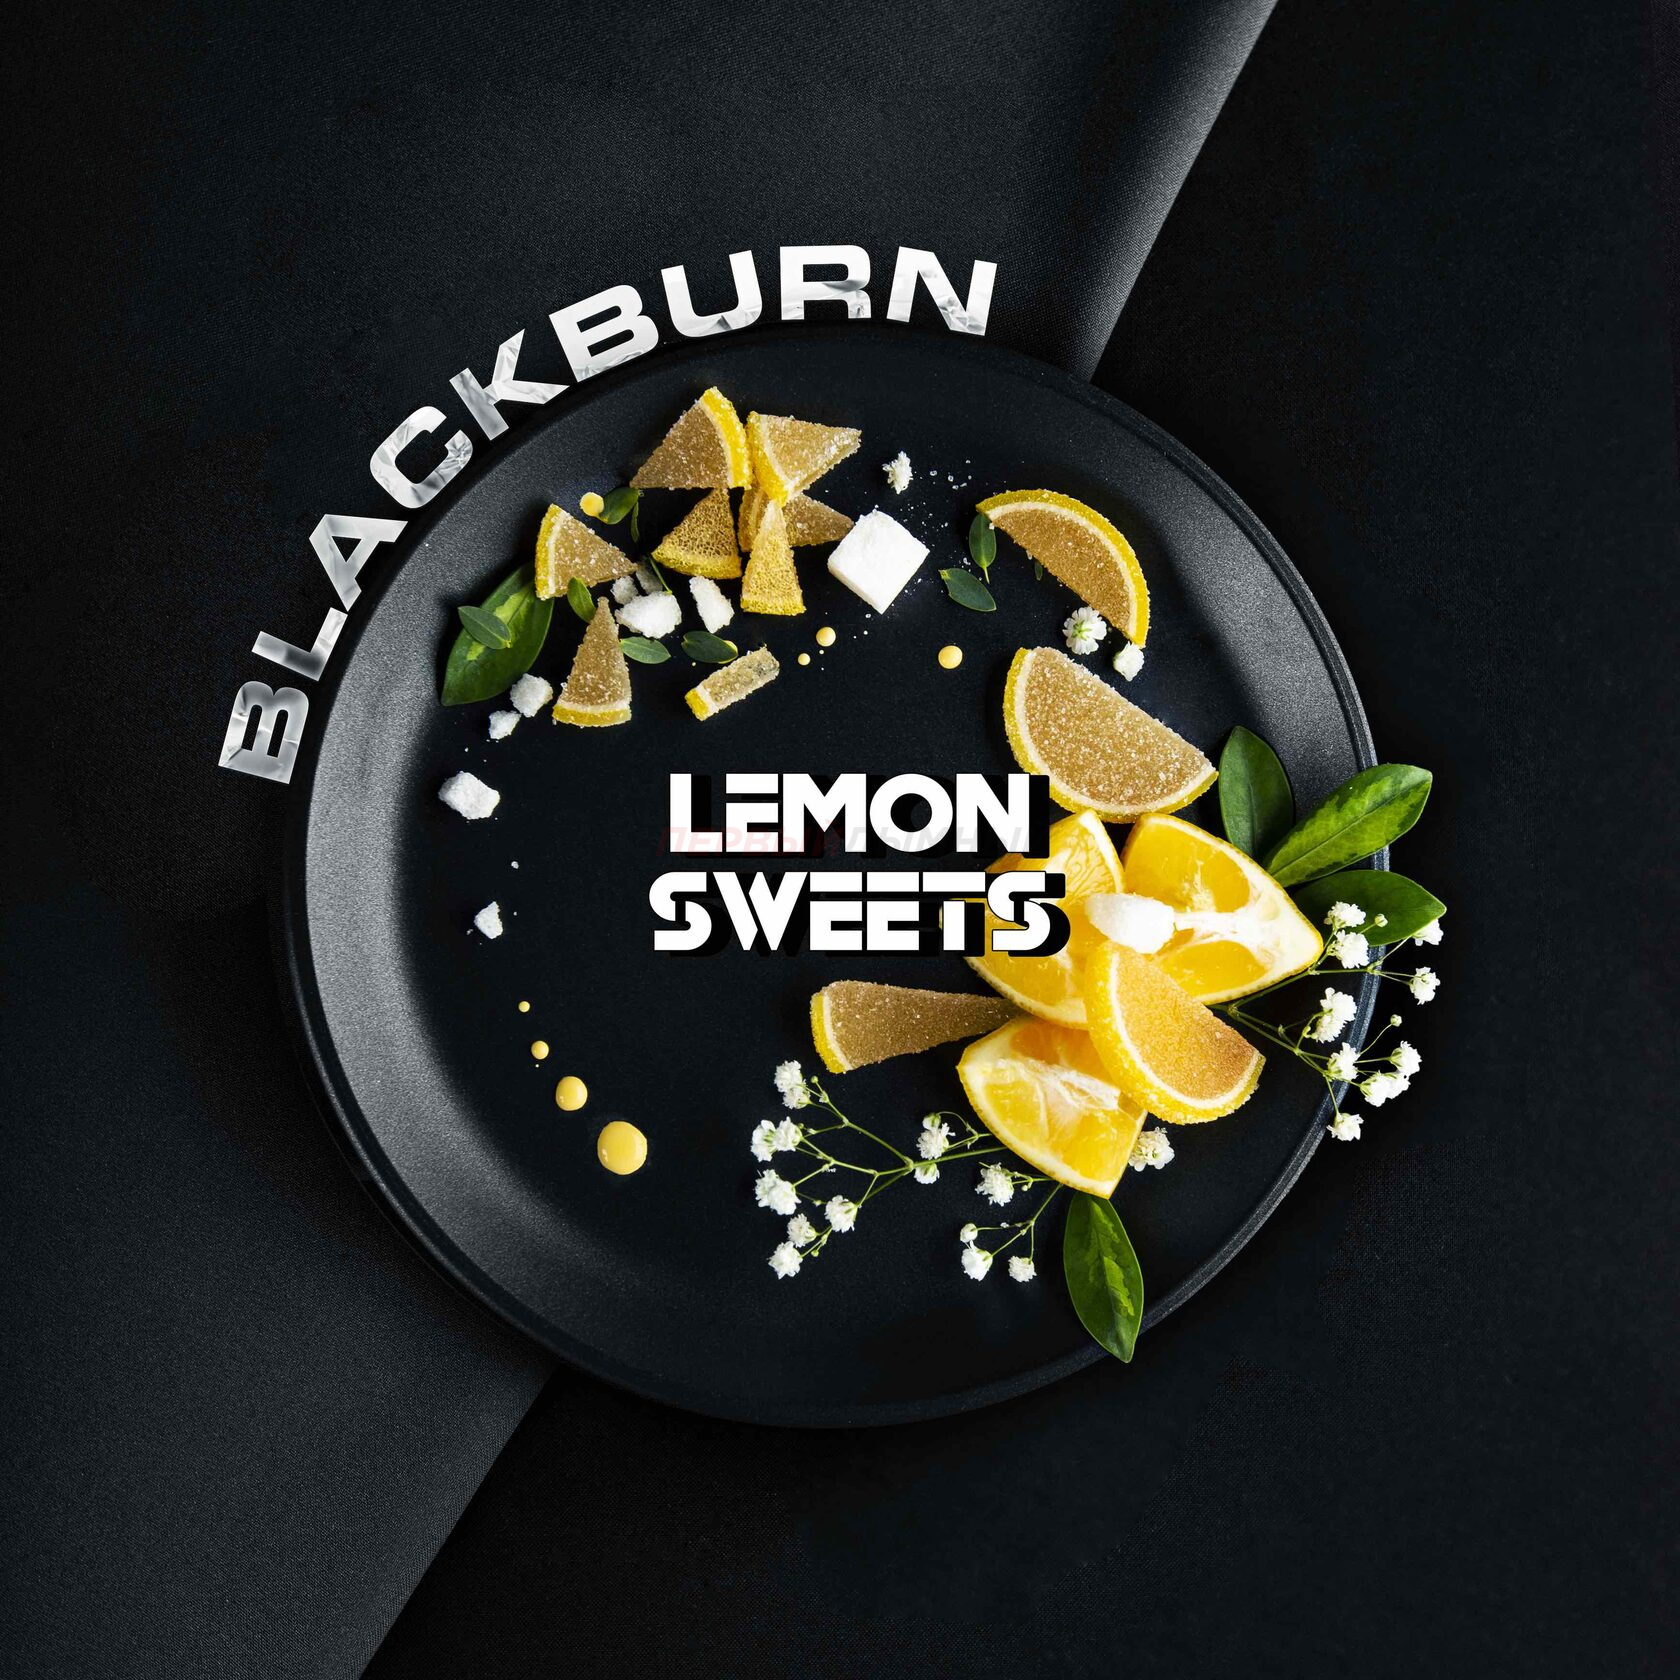 (МТ) BlackBurn 100гр Lemon Sweets - Лимонные конфеты